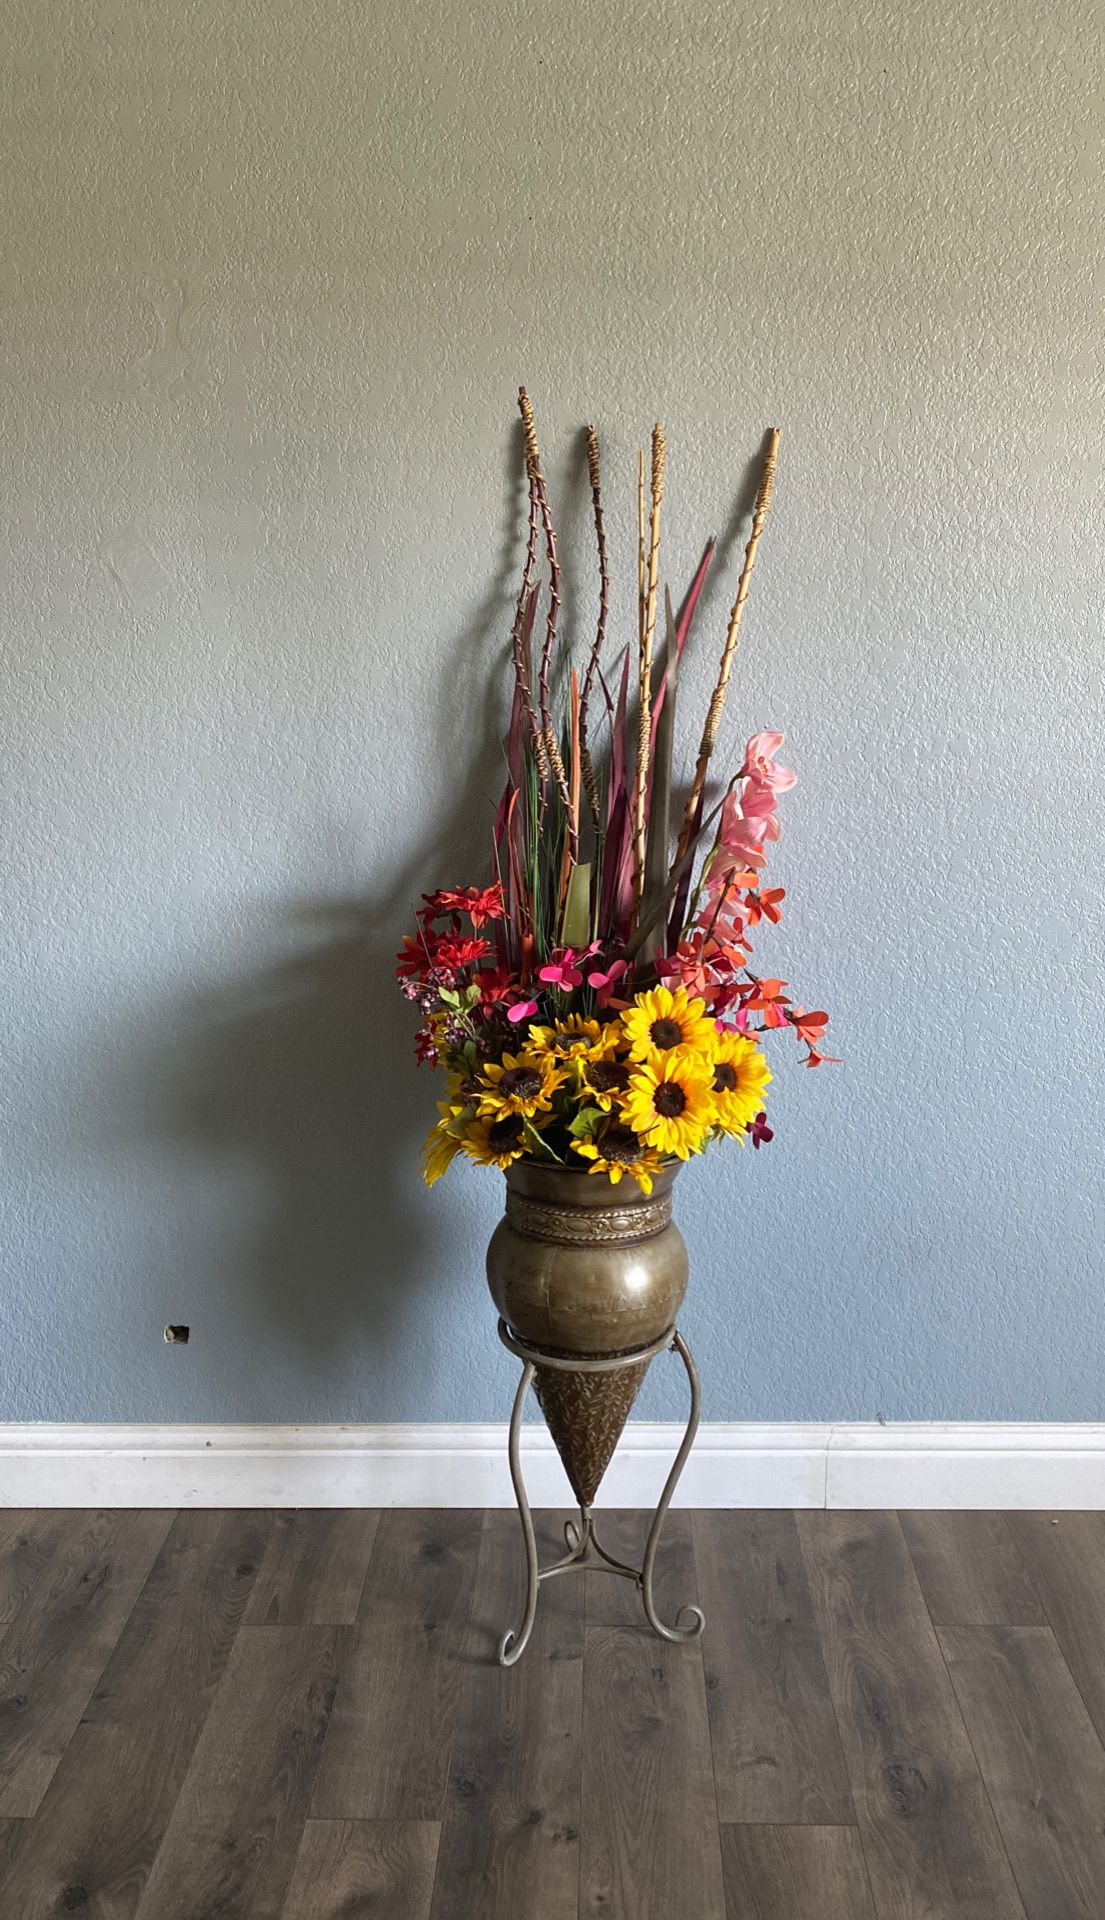 Flower decoration vase and arrangement